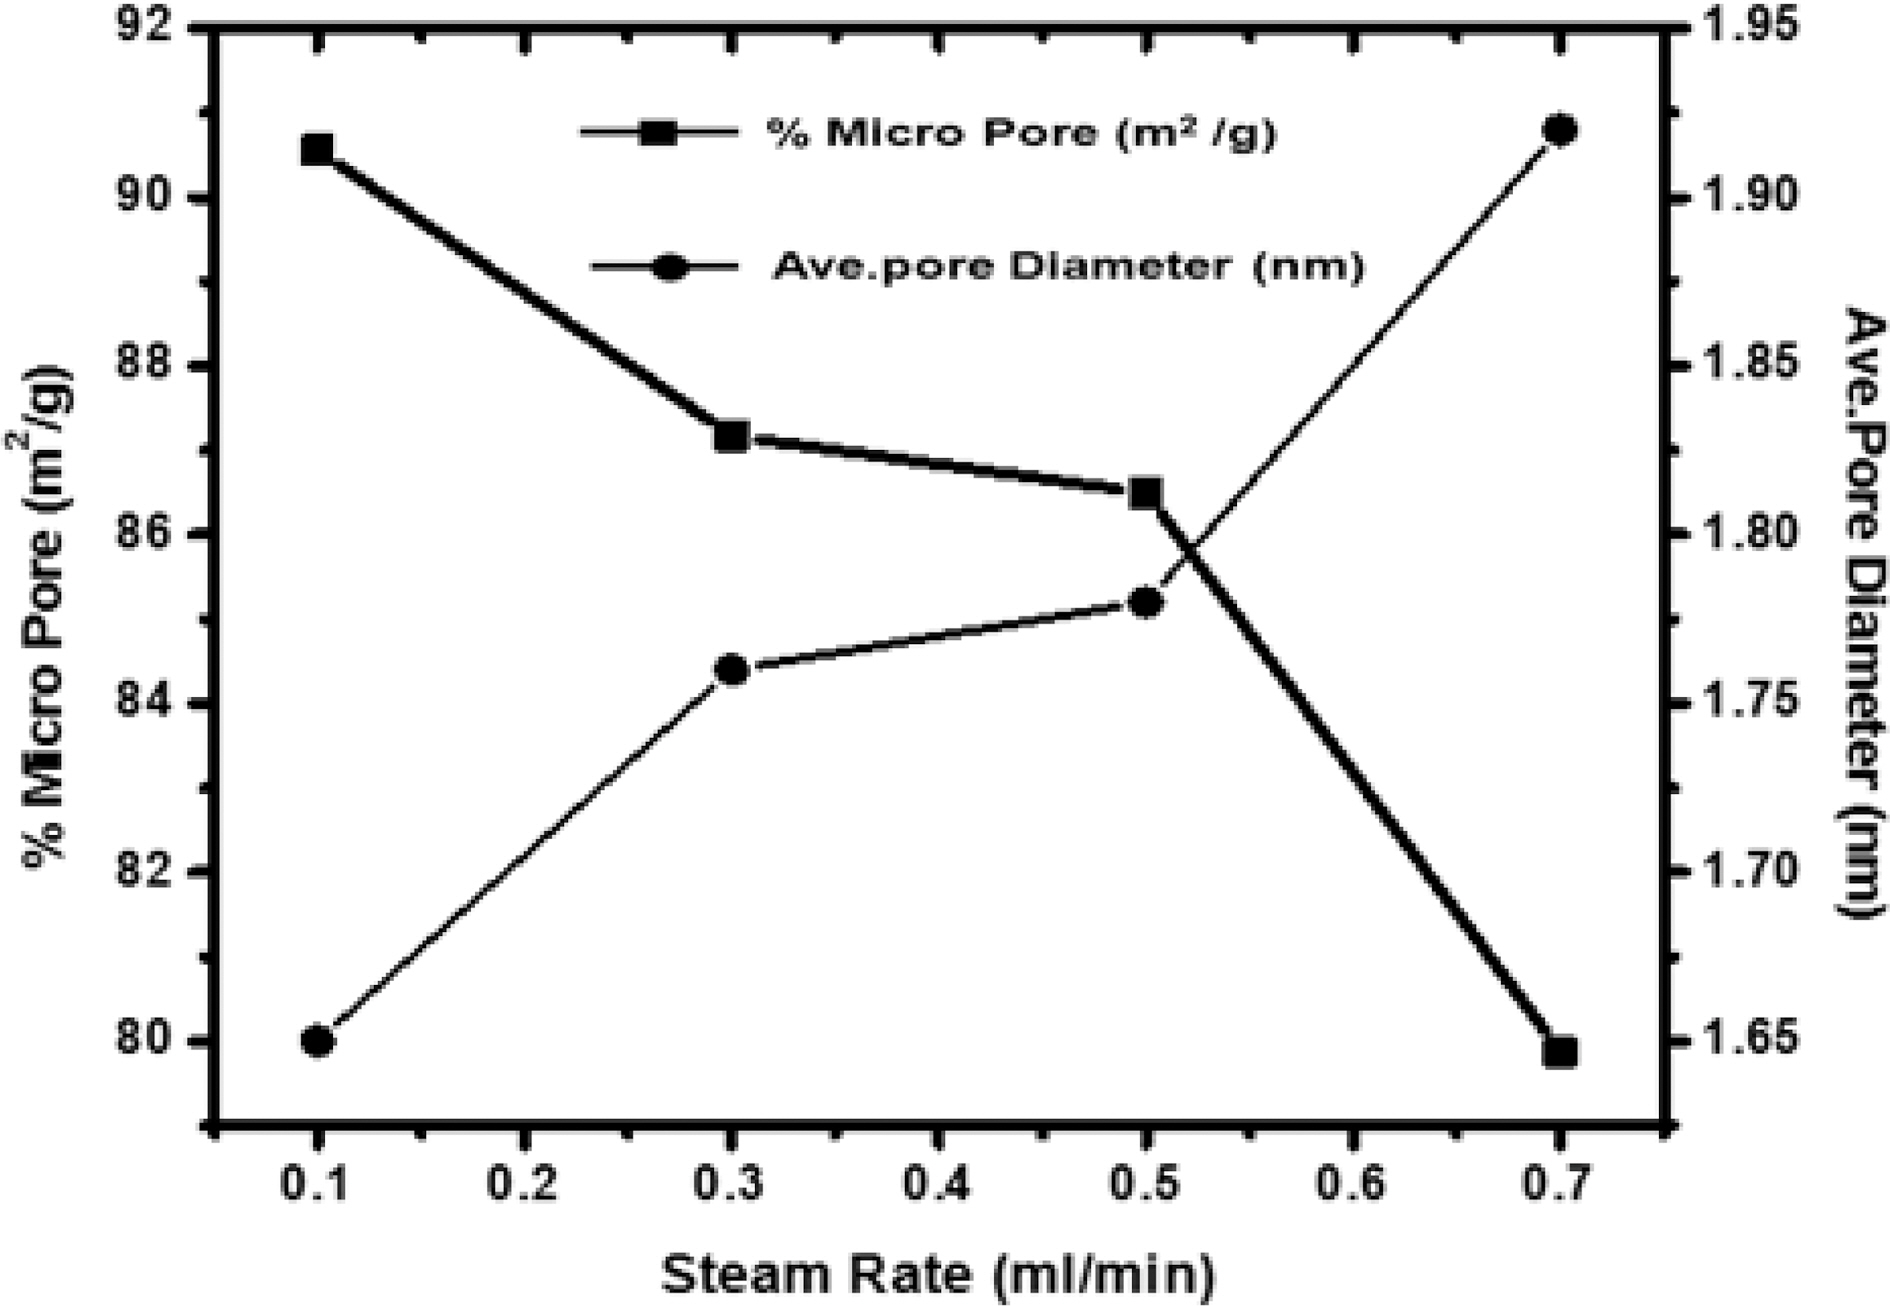 Correlation of effect of steam rate versus percentage micropore and average pore diameter.